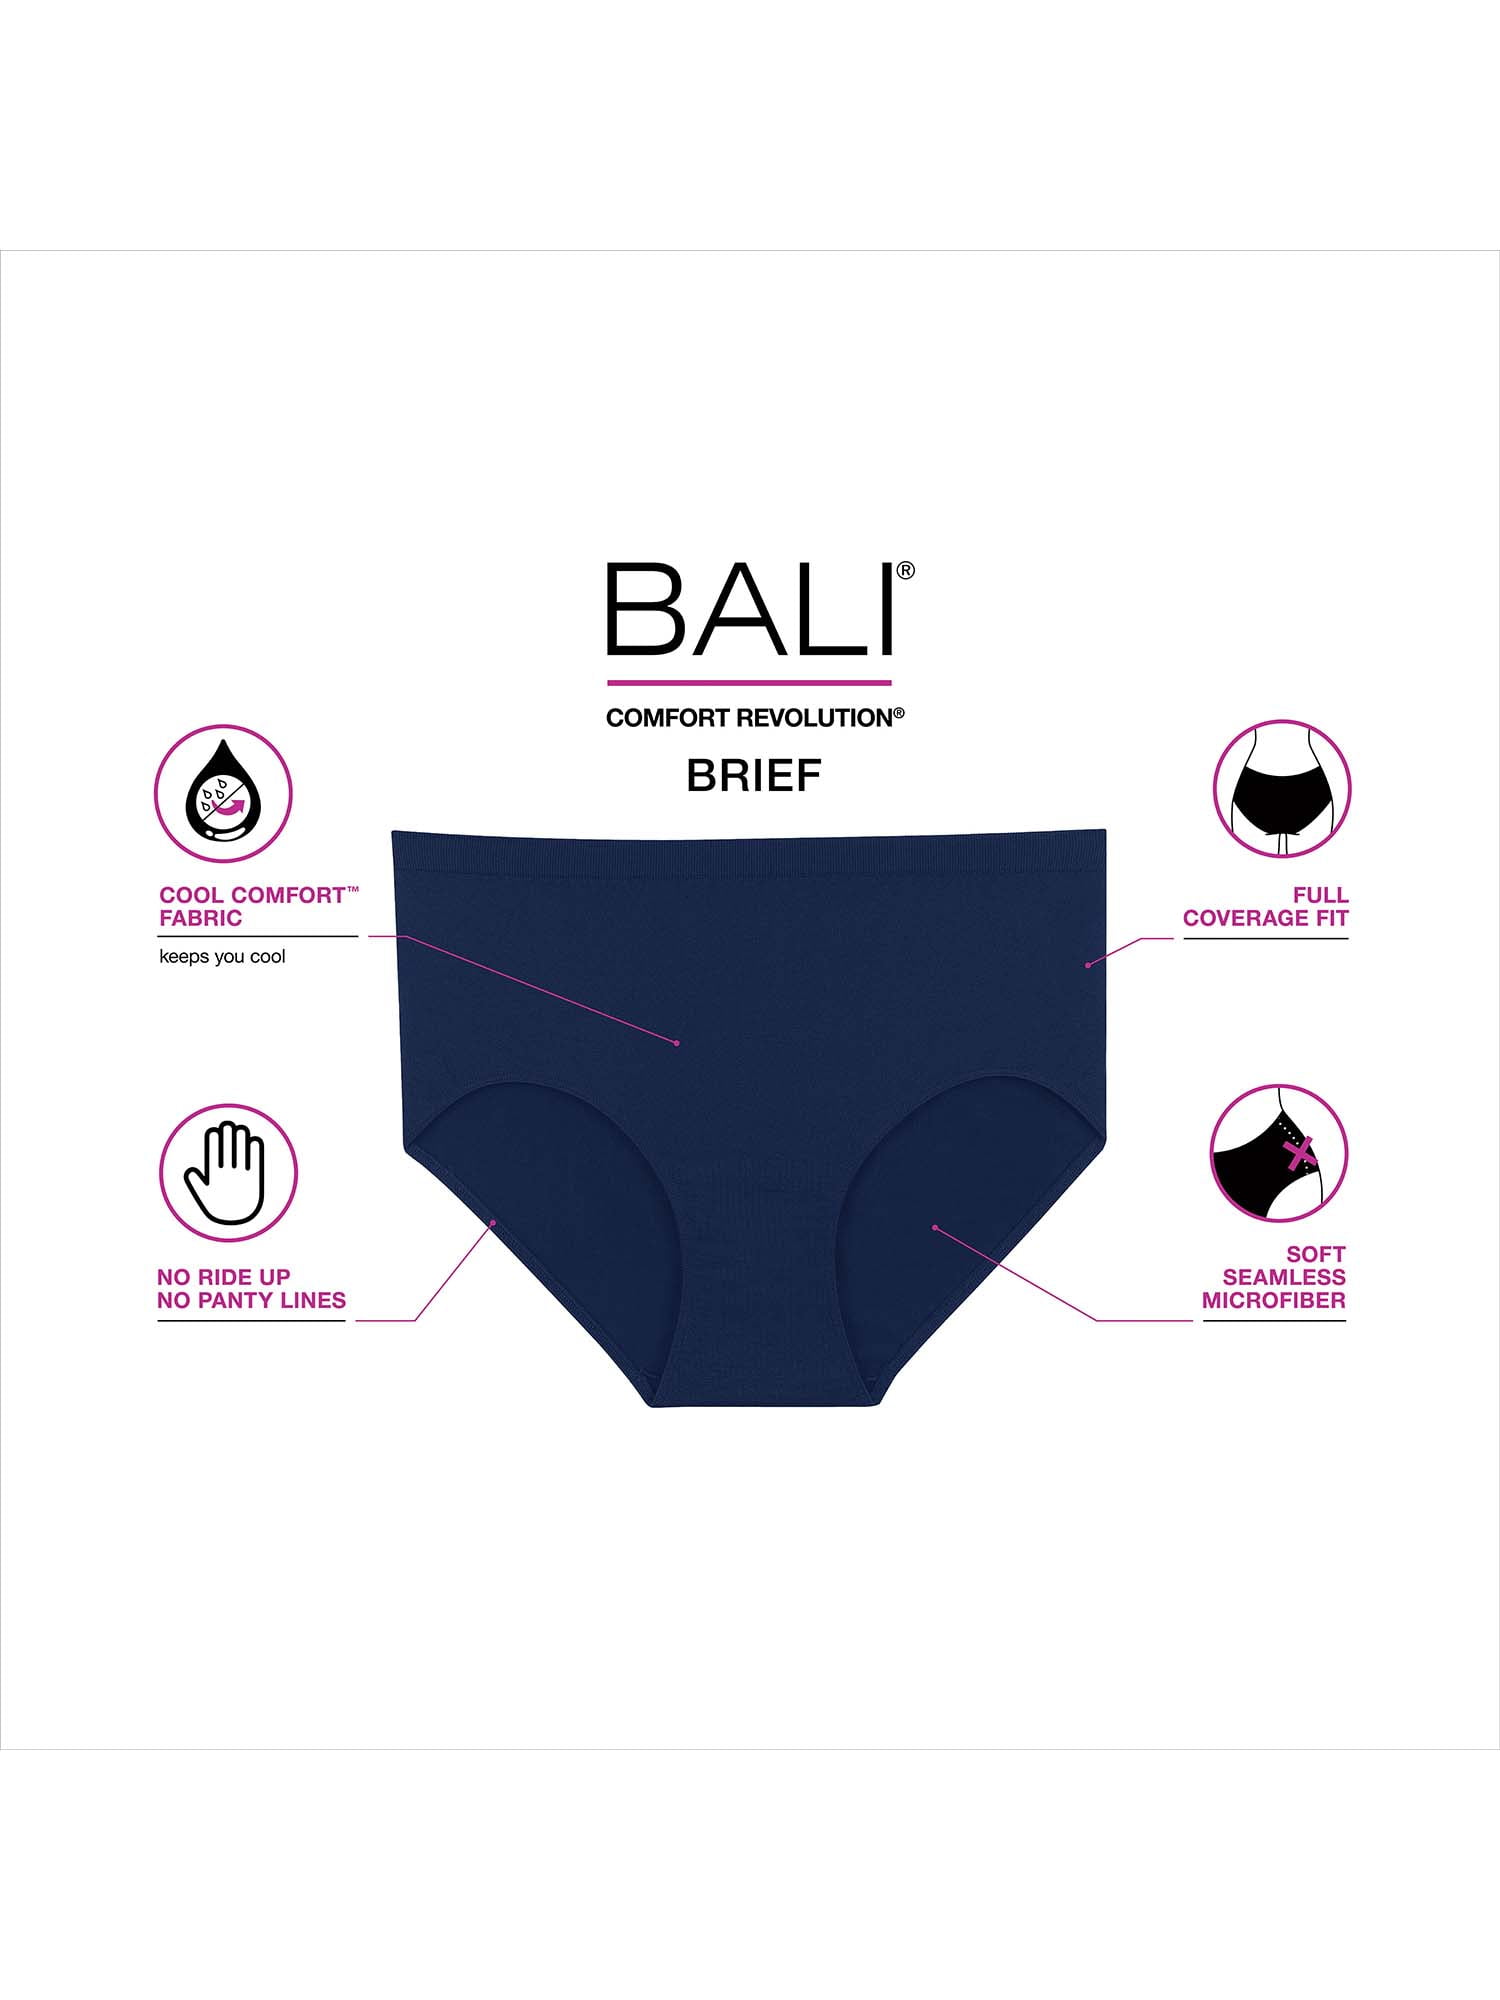 Bali Comfort Revolution Microfiber Brief, 3-Pack Nude/Light Beige